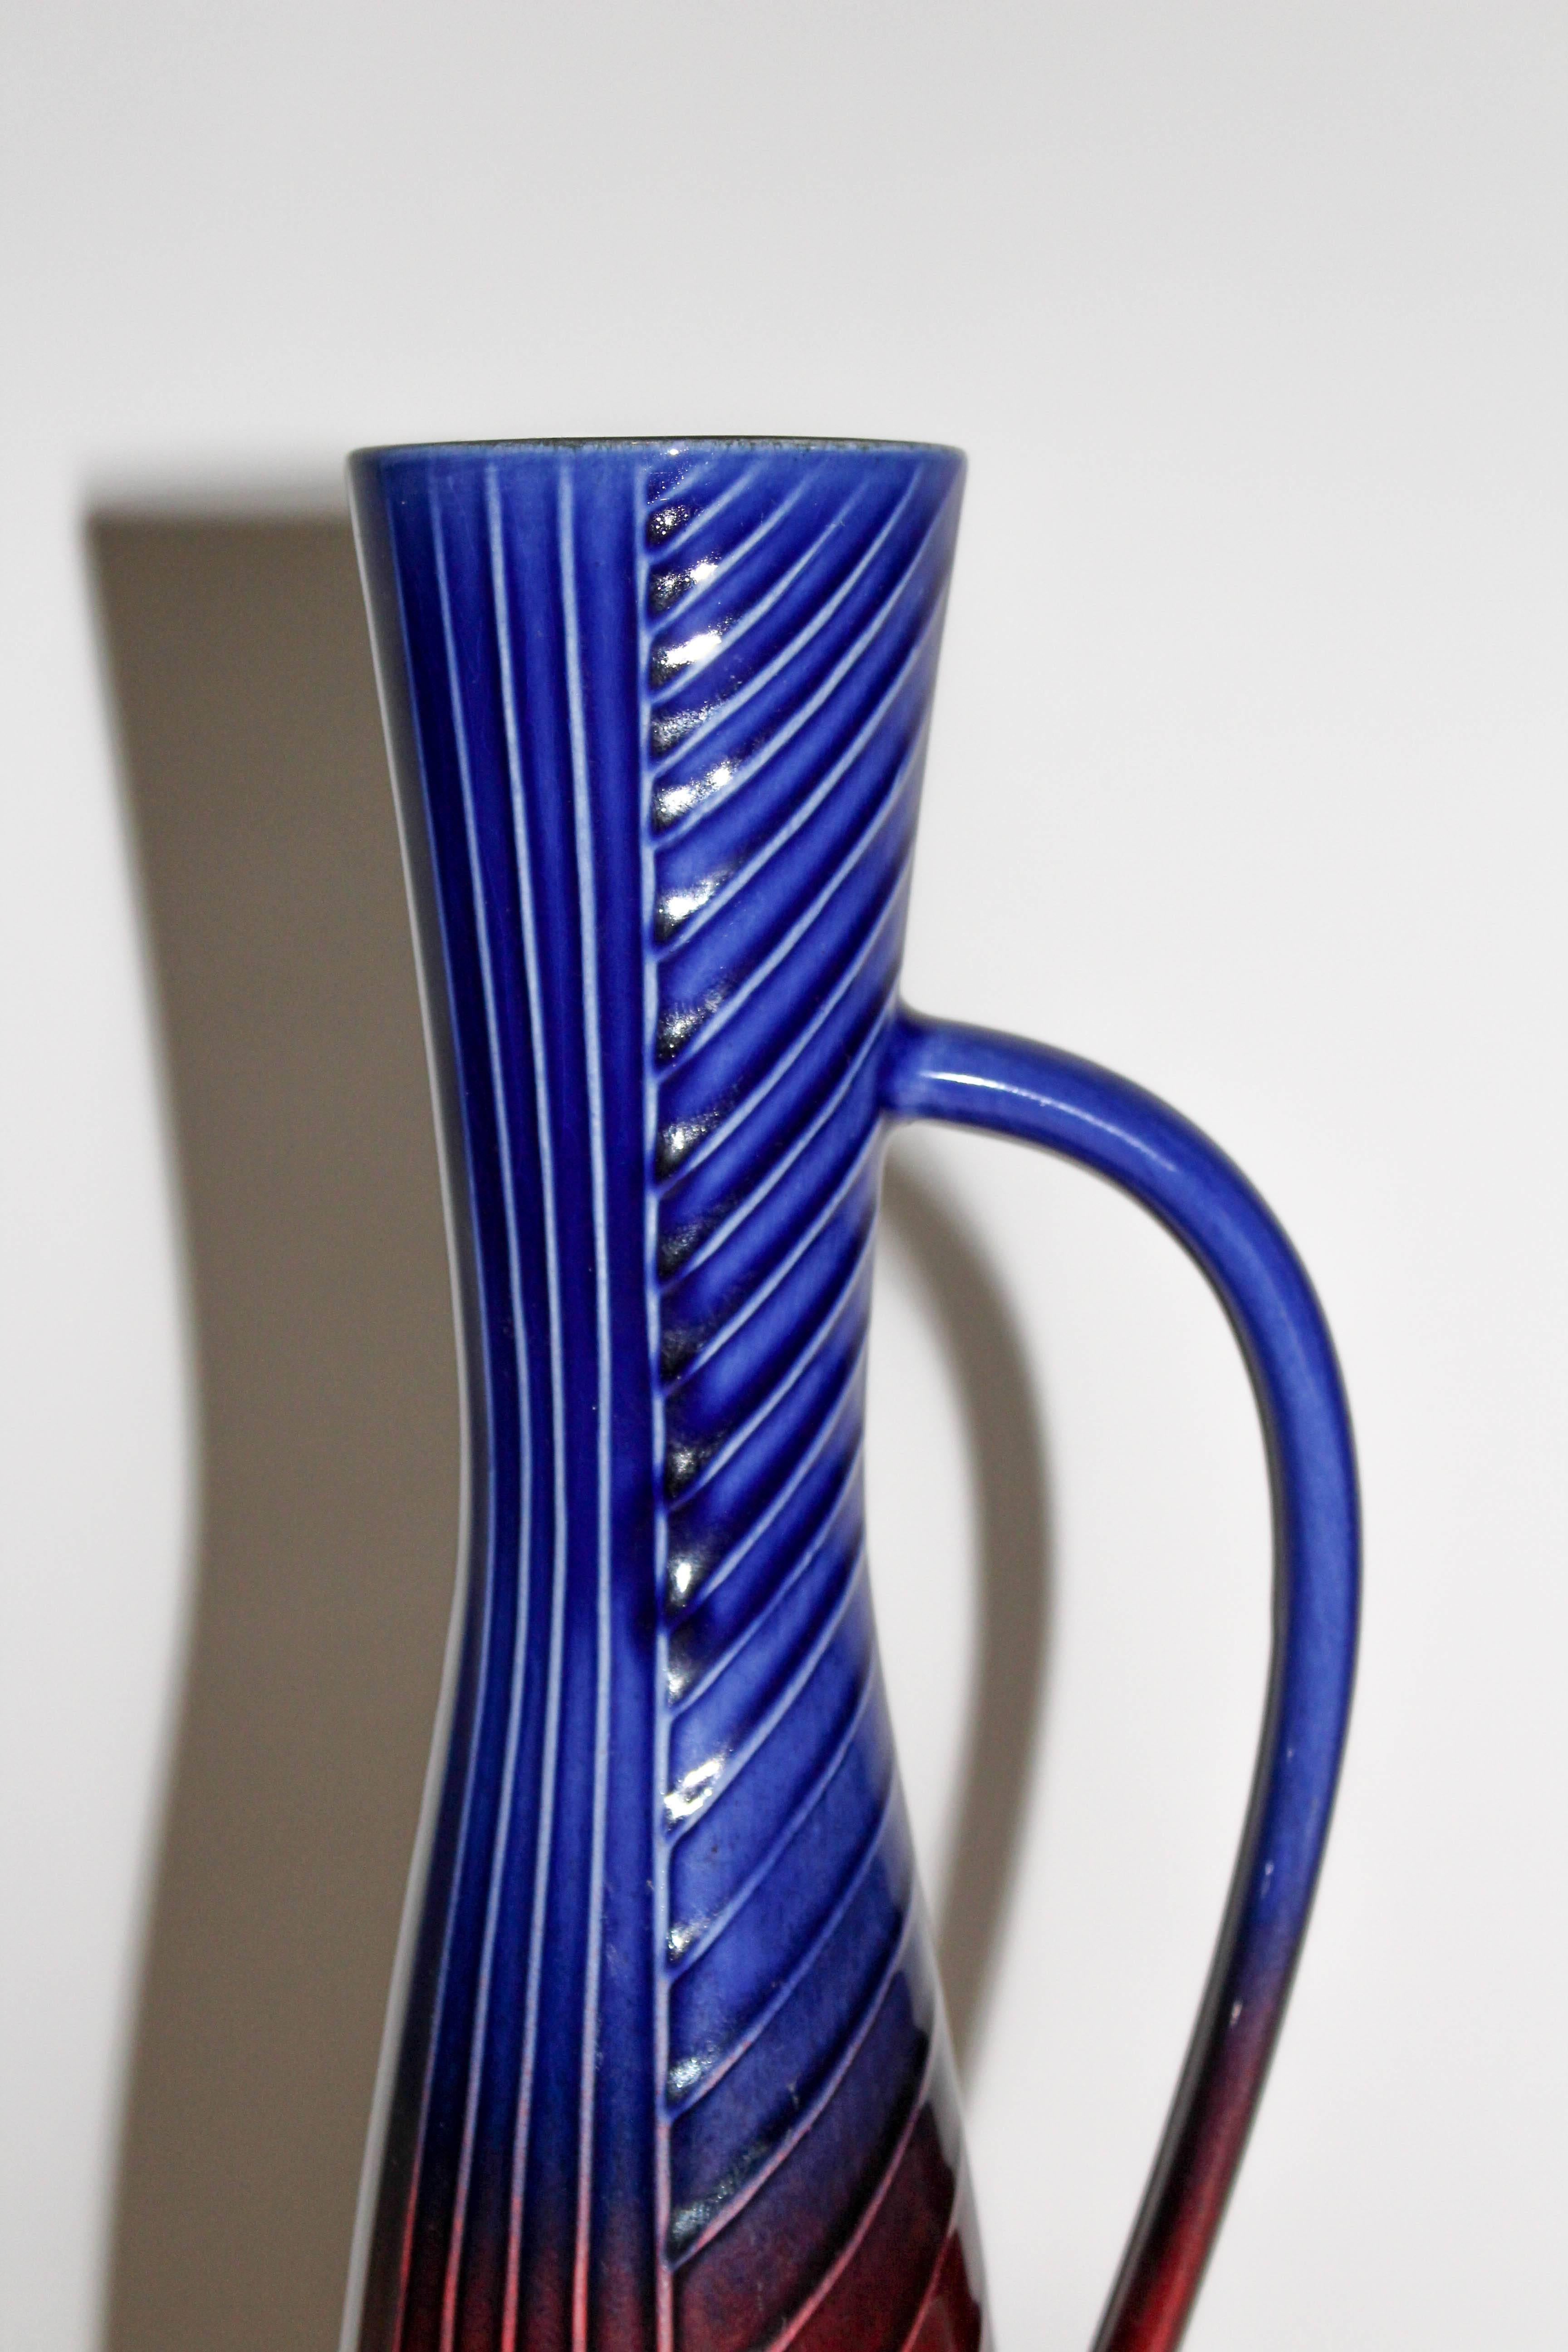 Midcentury ceramic vase by Swedish designer Carl Harry Stålhane produced by Rörstrand. The vase is in excellent vintage condition.